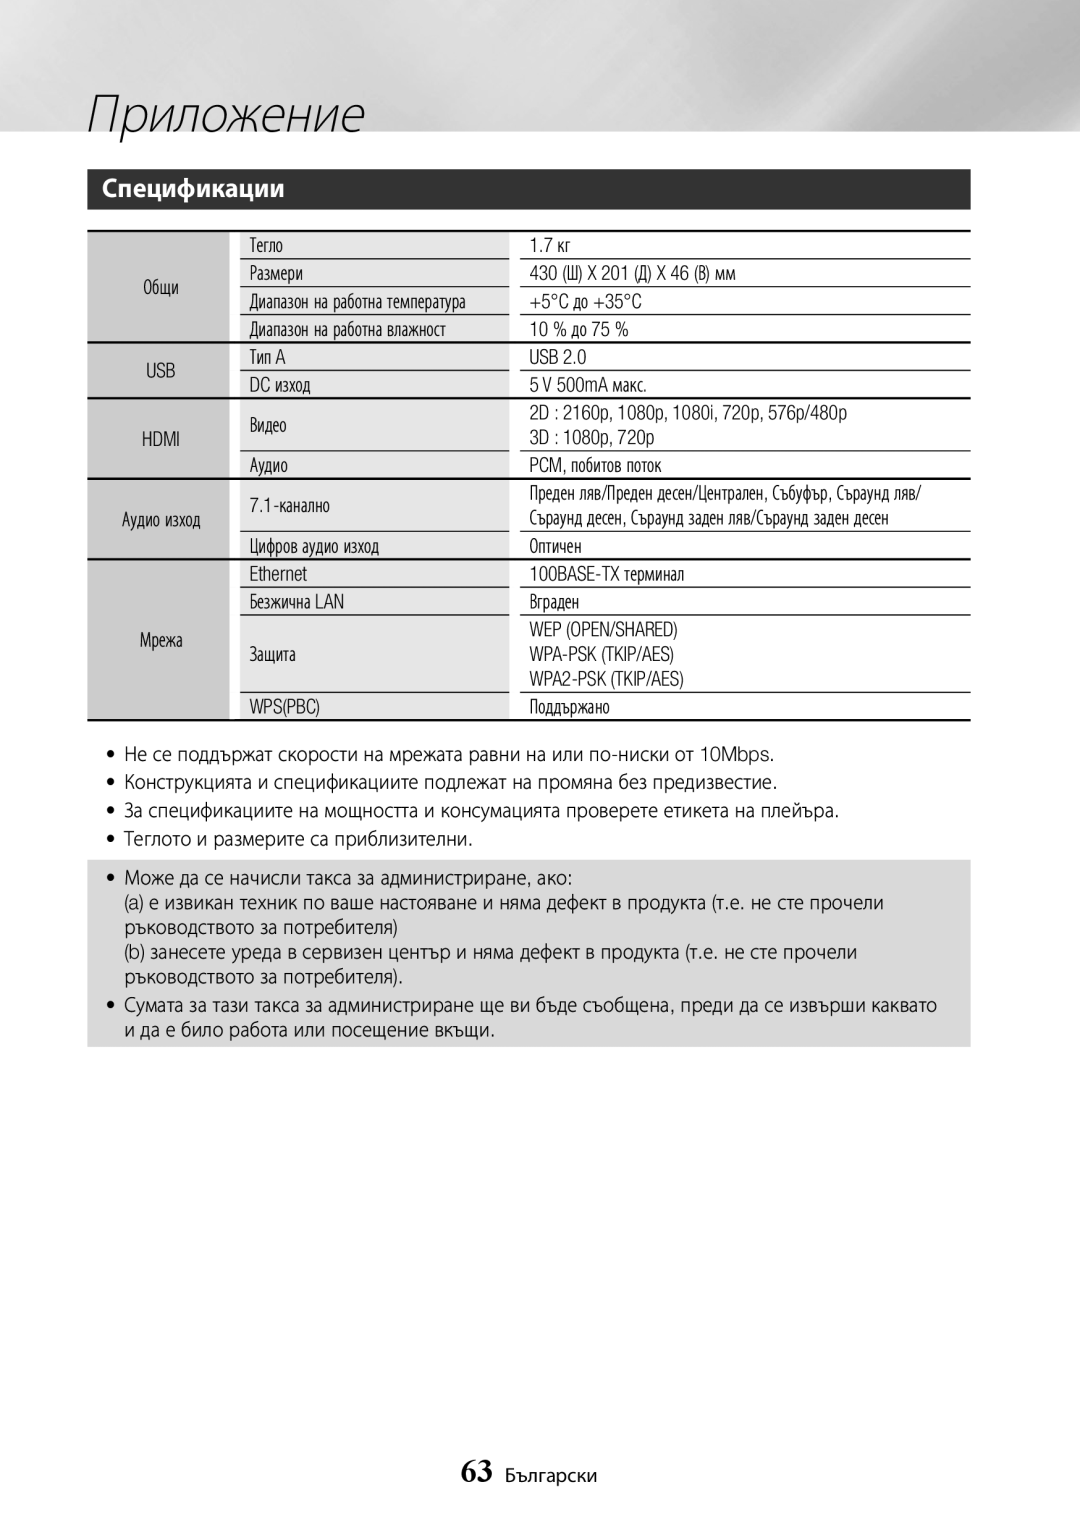 Samsung BD-J7500/EN manual Спецификации, Приложение, 63 Български 